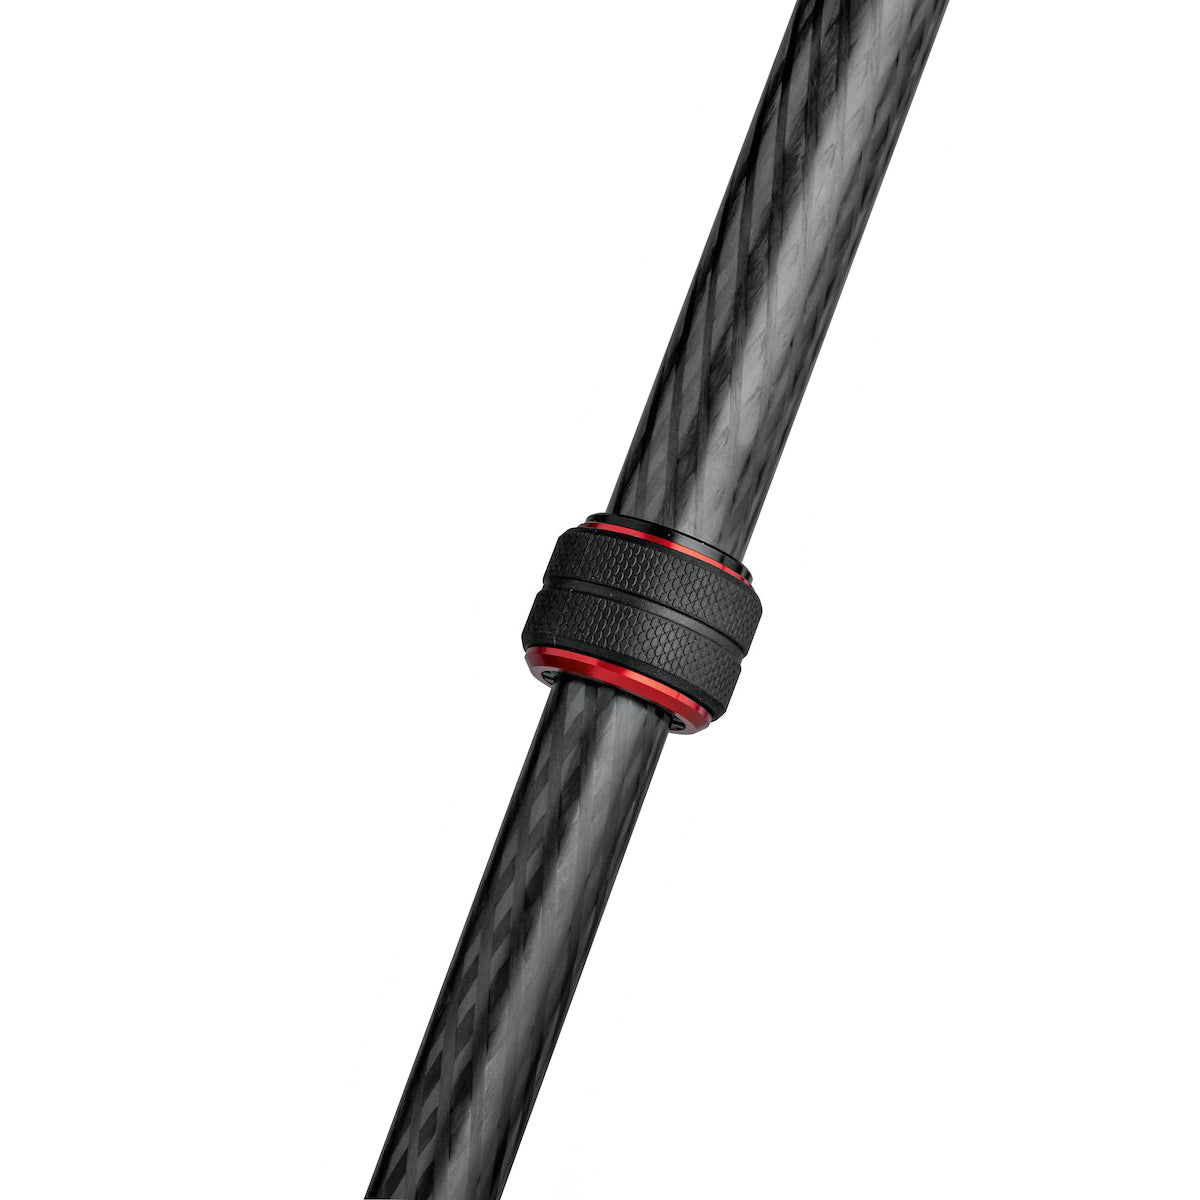 Manfrotto 190go! Carbon Fiber 4 Section Tripod with 3 Way Pan/Tilt Head Kit